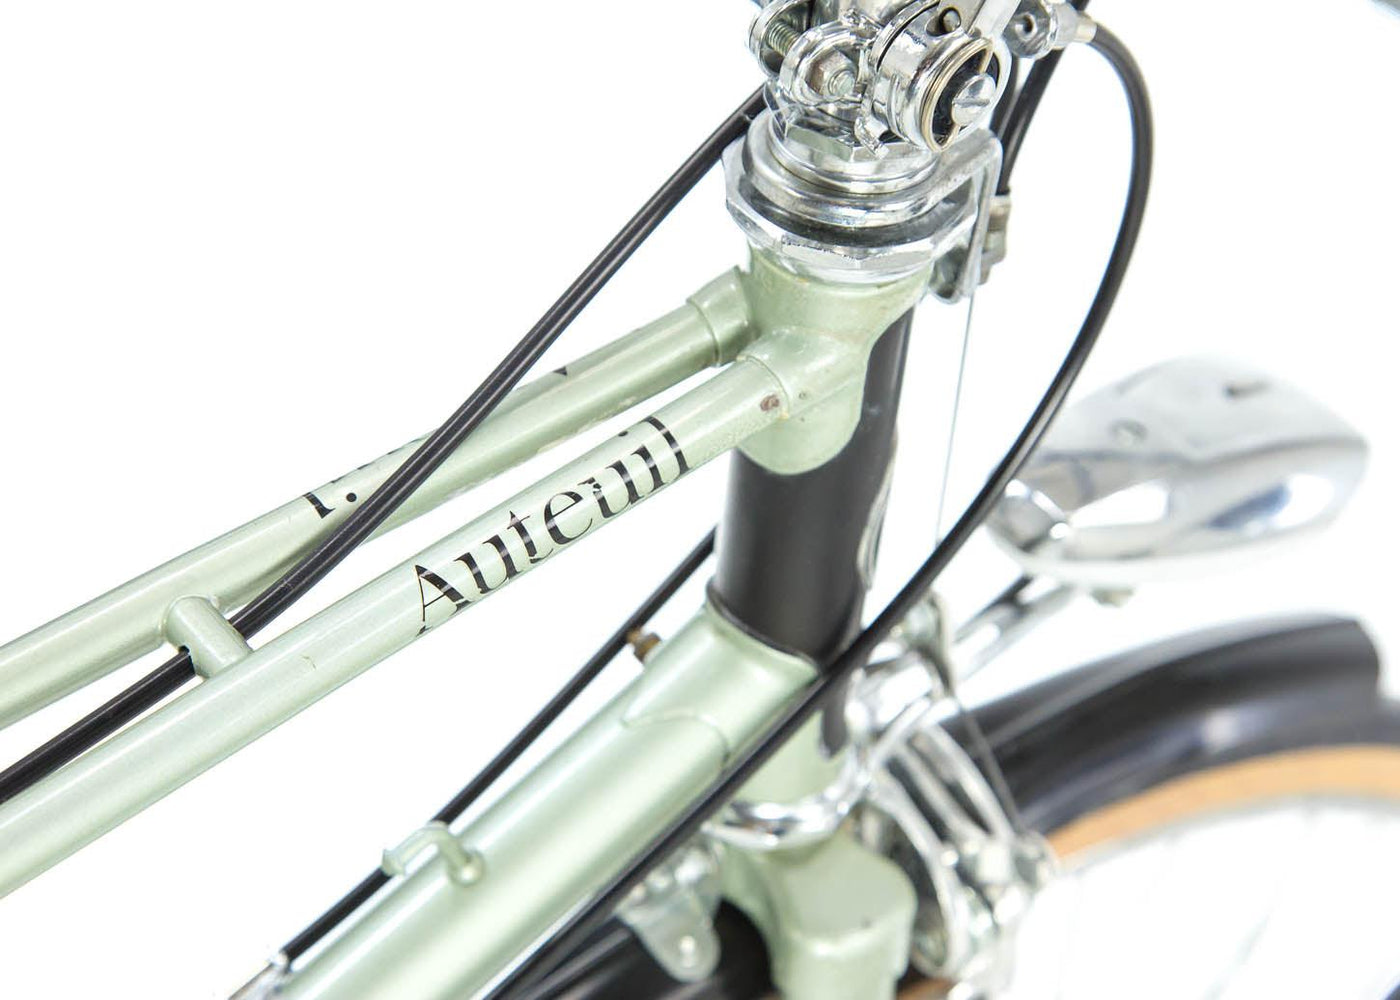 Puch Auteuil Mixte Ladies Bike 1978 - Steel Vintage Bikes